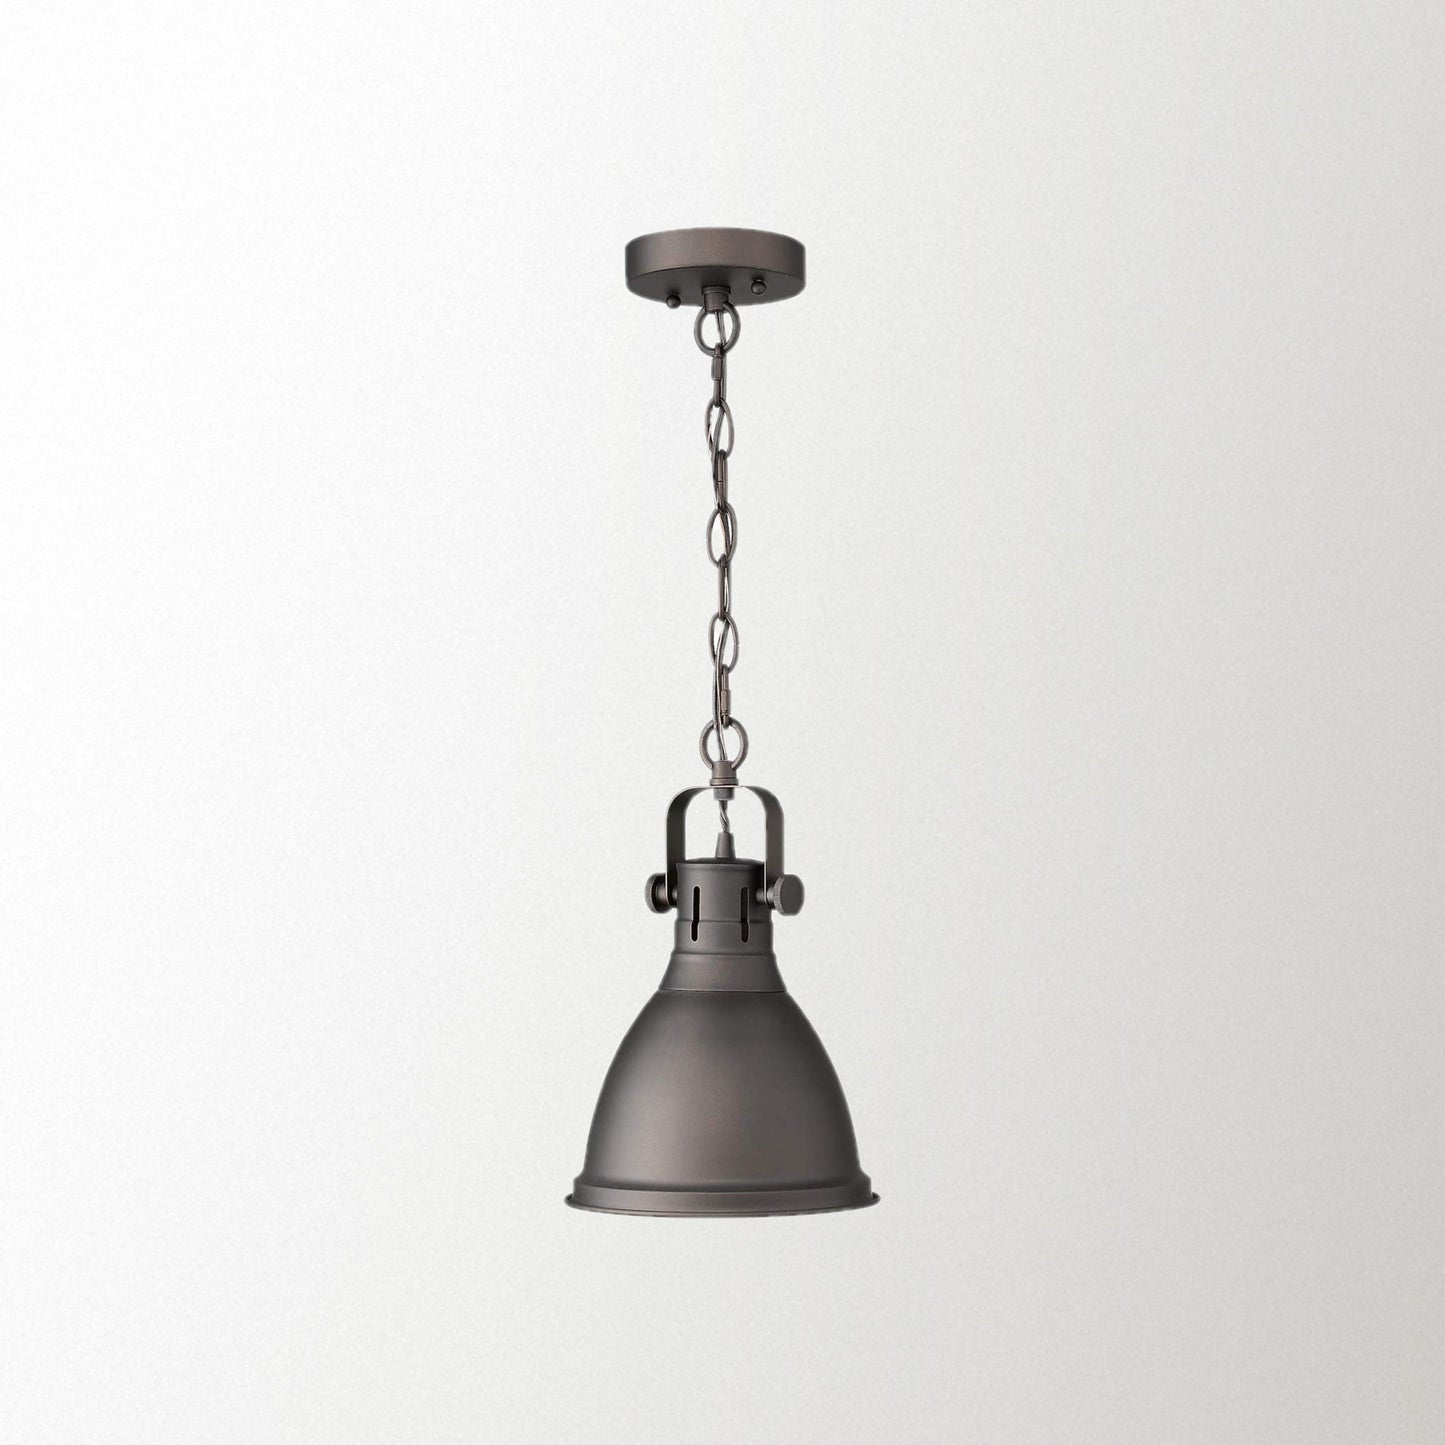 
                  
                    Emliviar Mini Pendant Light with Metal Shade, Brushed Nickel Finish,8 inch, 4054M BN
                  
                